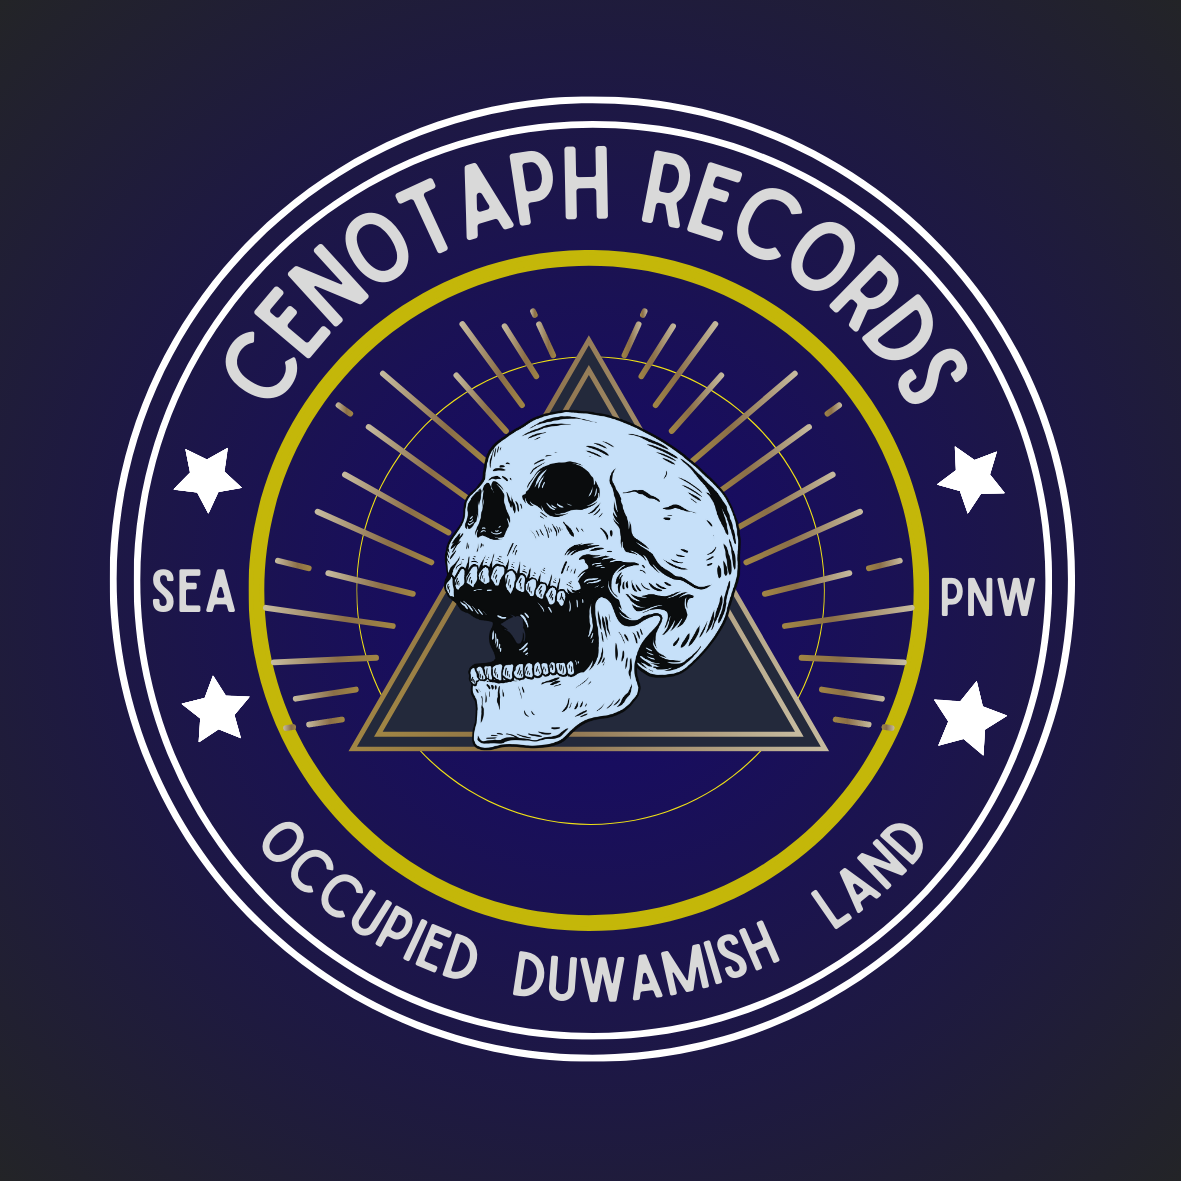 Cenotaph_Records